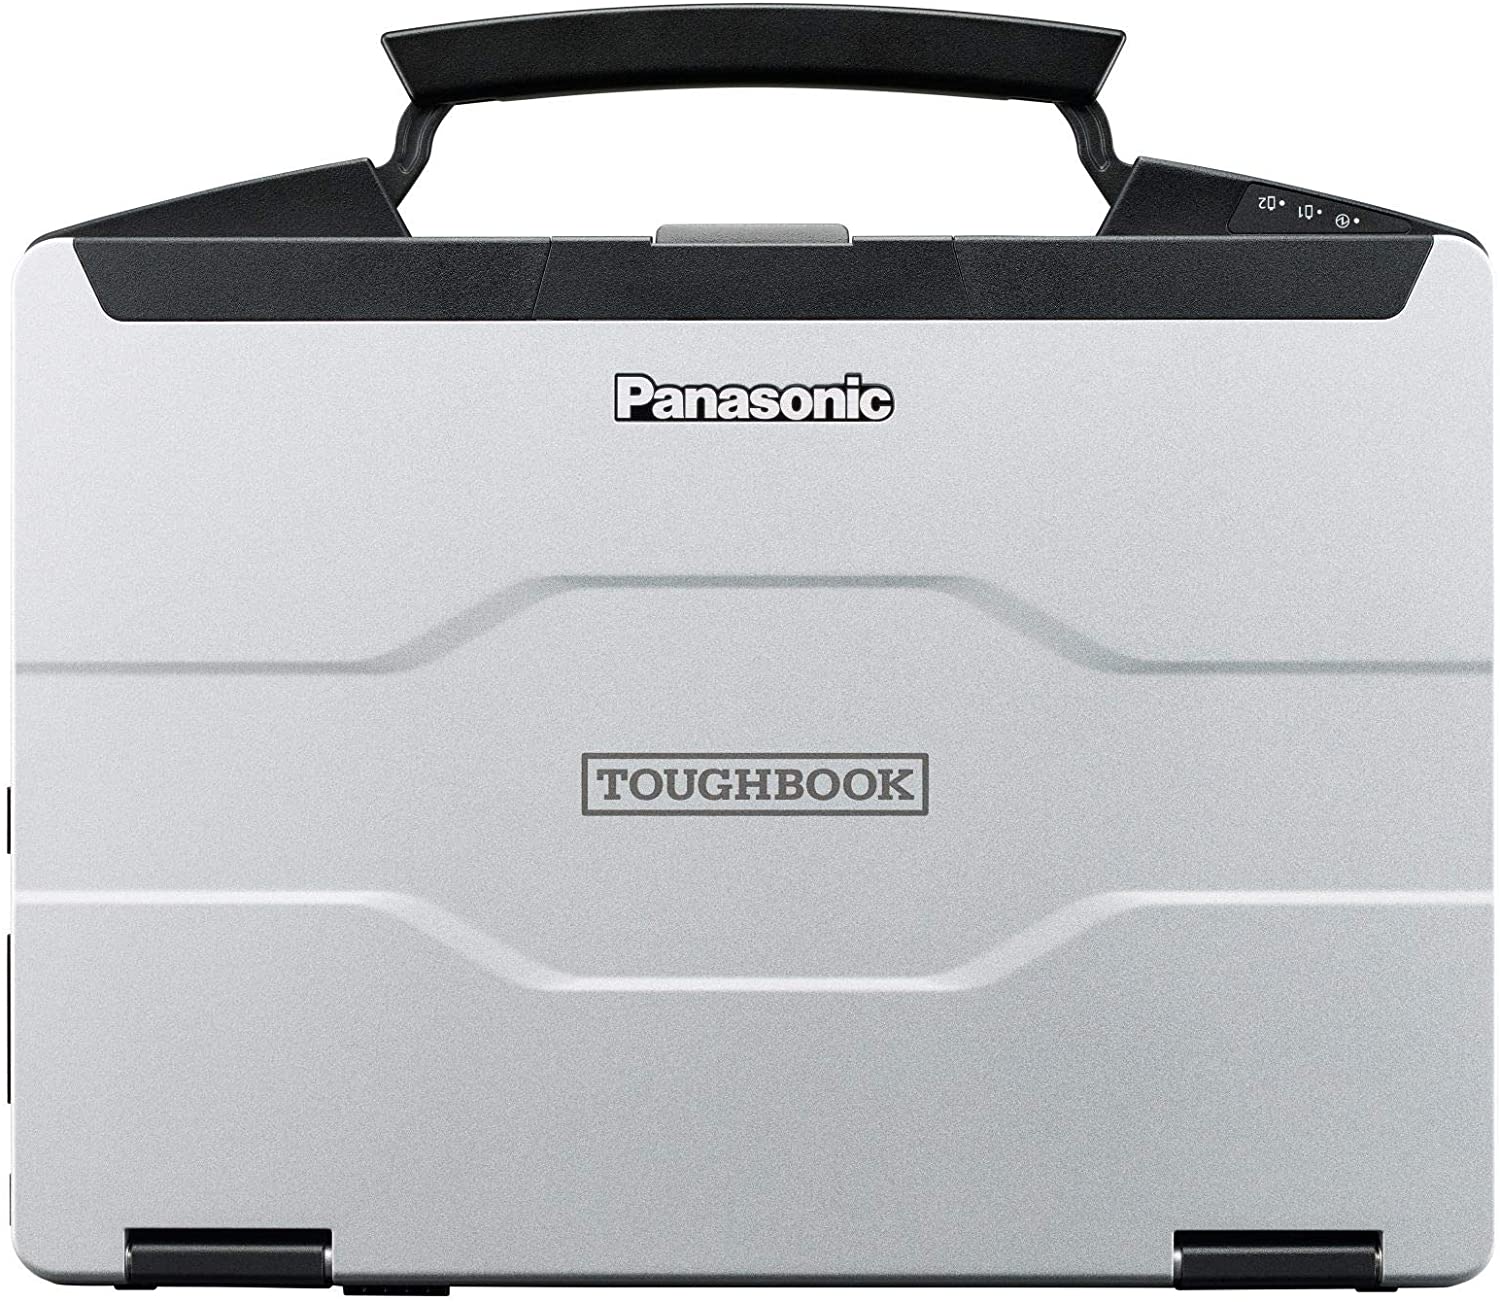 Panasonic Toughbook FZ-55, Intel Core i7-8665U @1.90GHz, 14.0" HD Multi Touch, 16GB, 512GB SSD, WiFi, HDMI, Bluetooth, Webcam, Backlit Keyboard, 4G LTE, GPS, Dual Pass, Windows 10 Pro